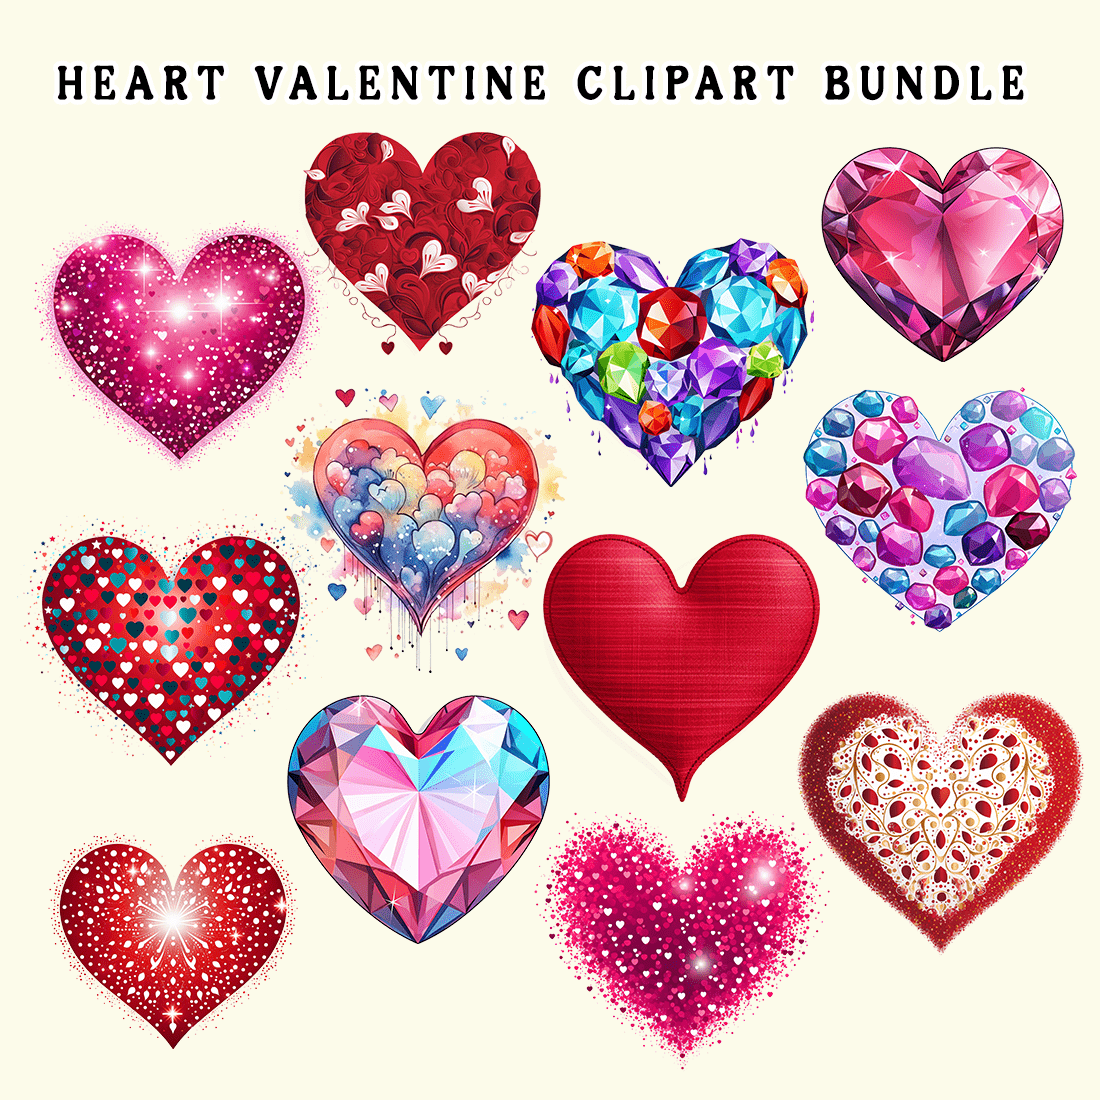 Heart Valentine Clipart Bundle preview image.